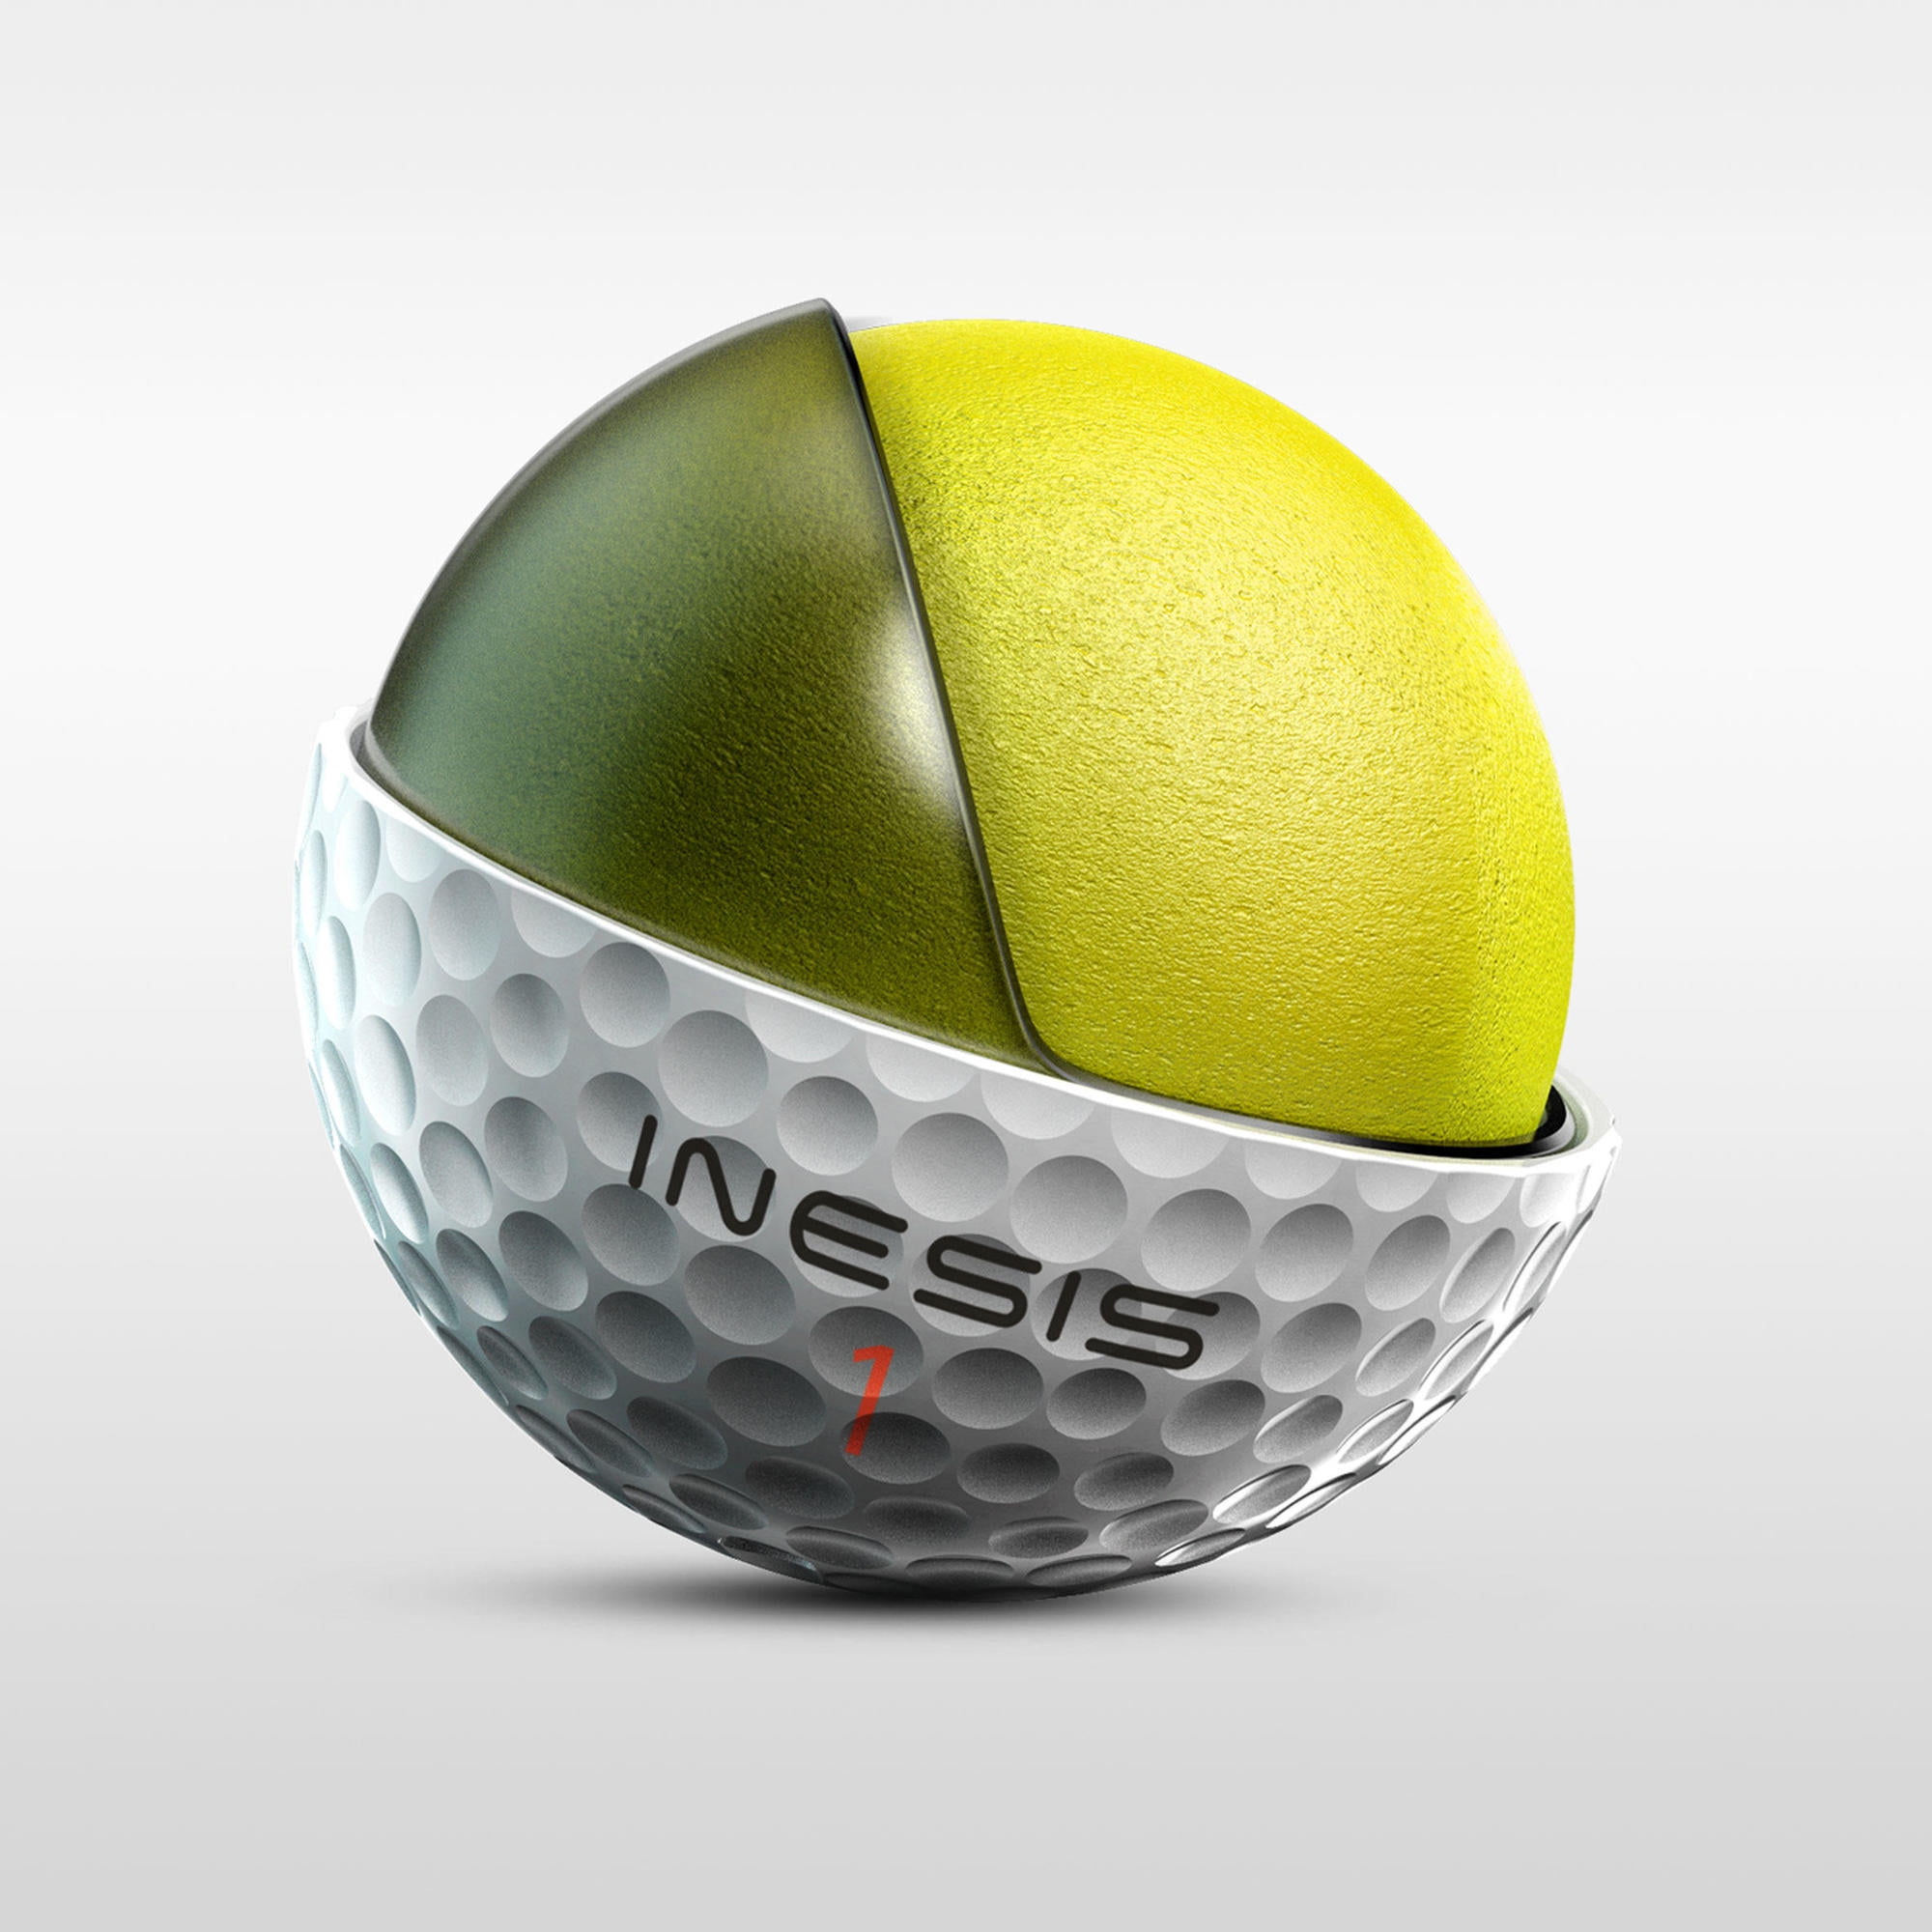 inesis tour 900 golf balls